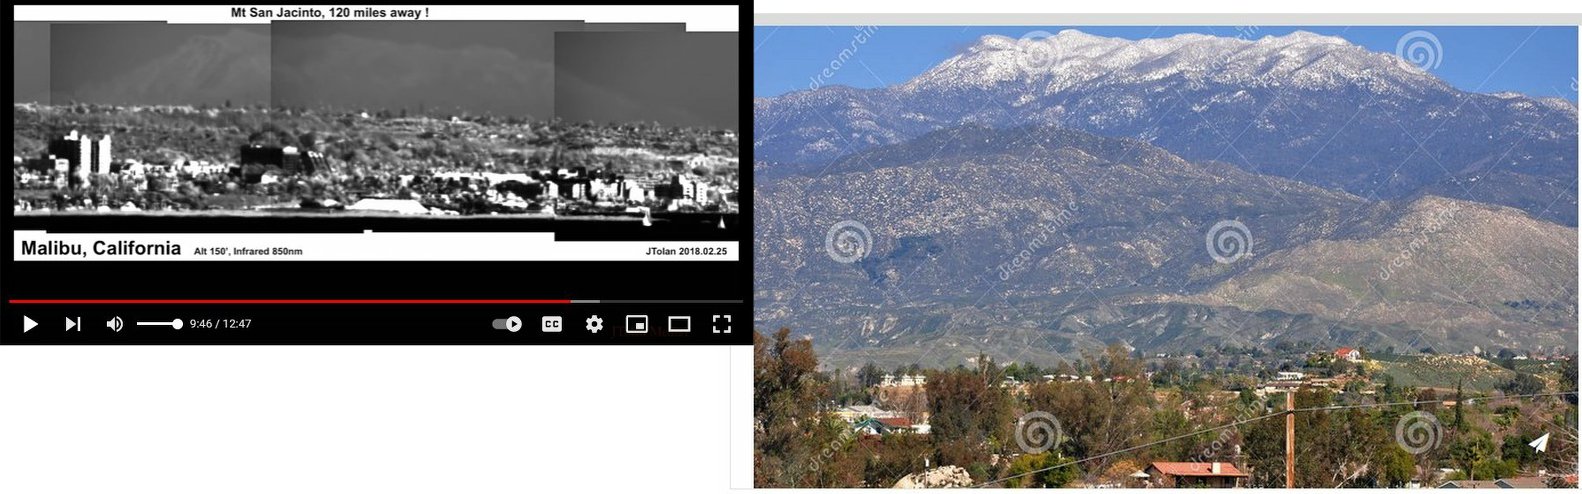 Side by side comparison of Mt. San Jacinto